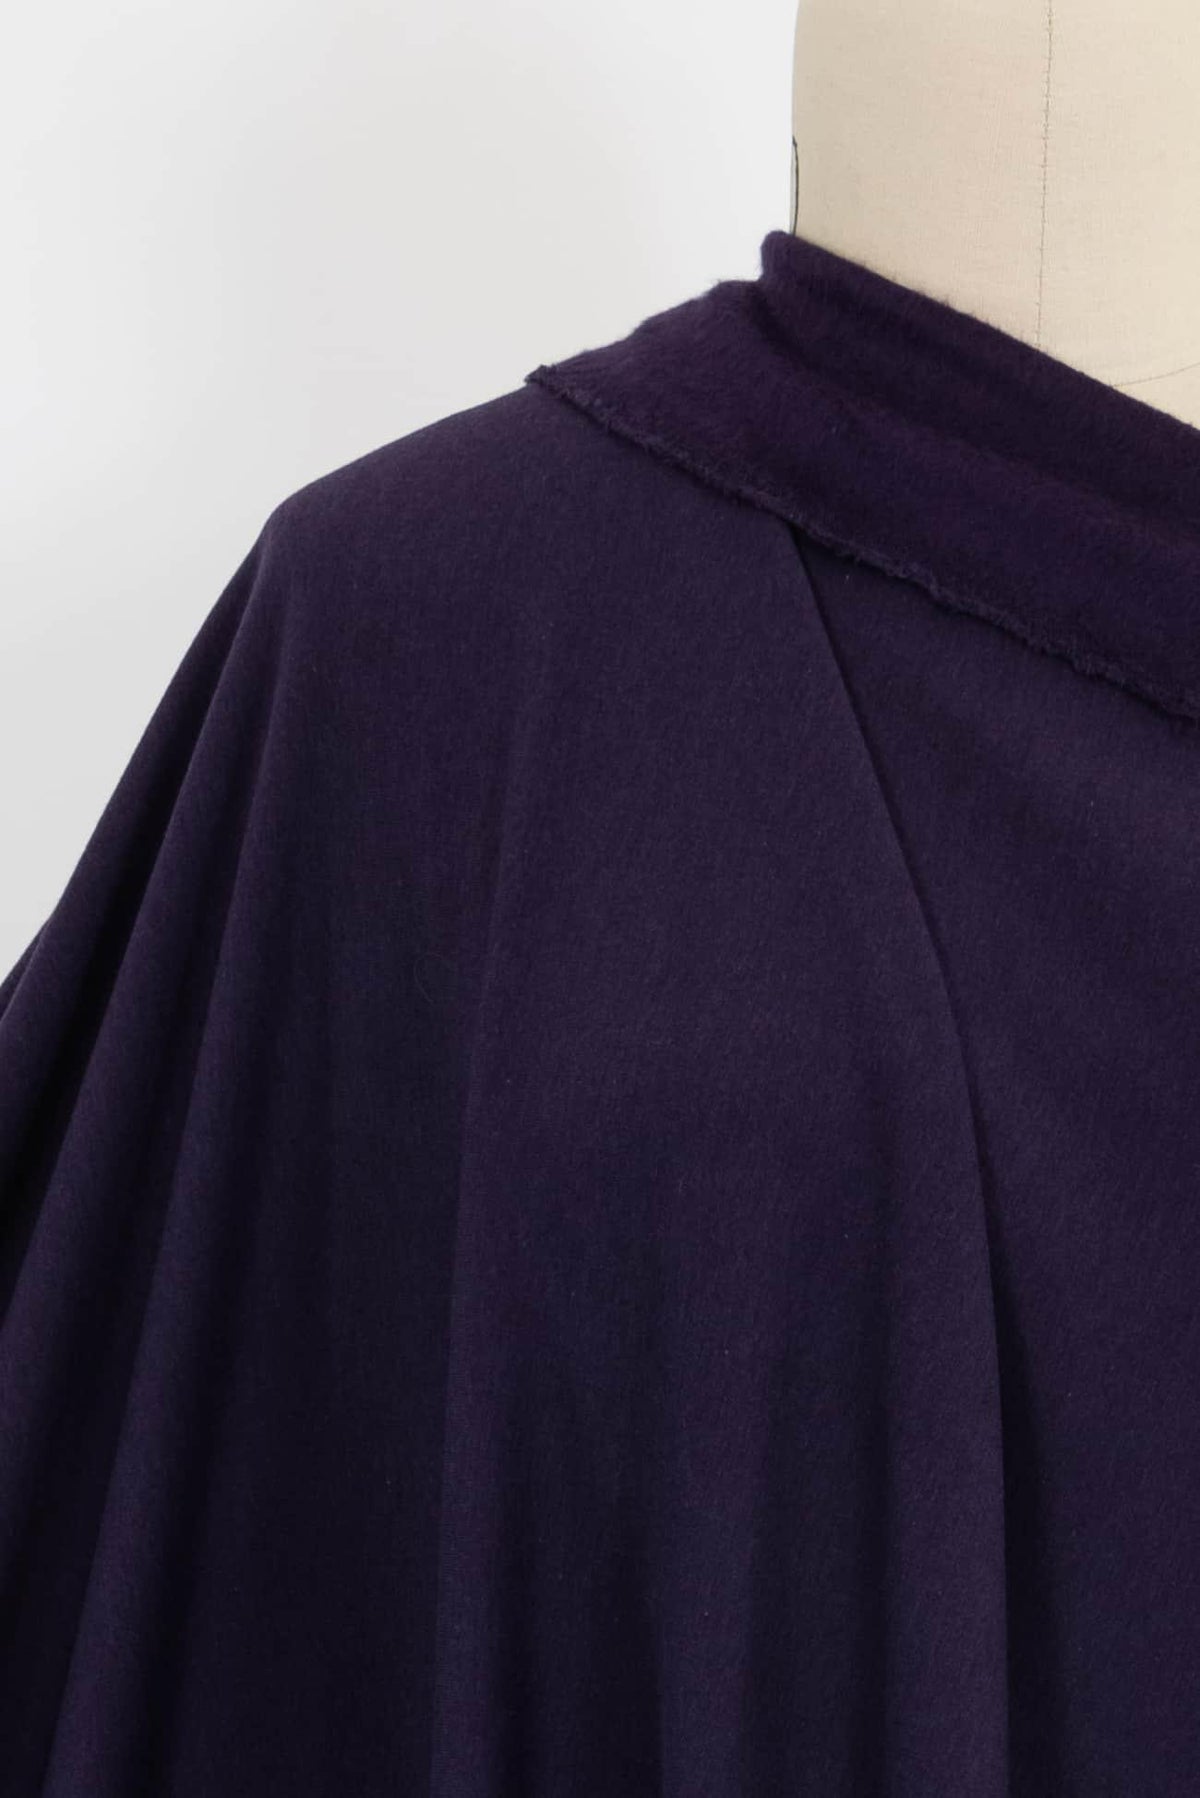 Empress Purple Bamboo/Cotton Fleece Knit - Marcy Tilton Fabrics